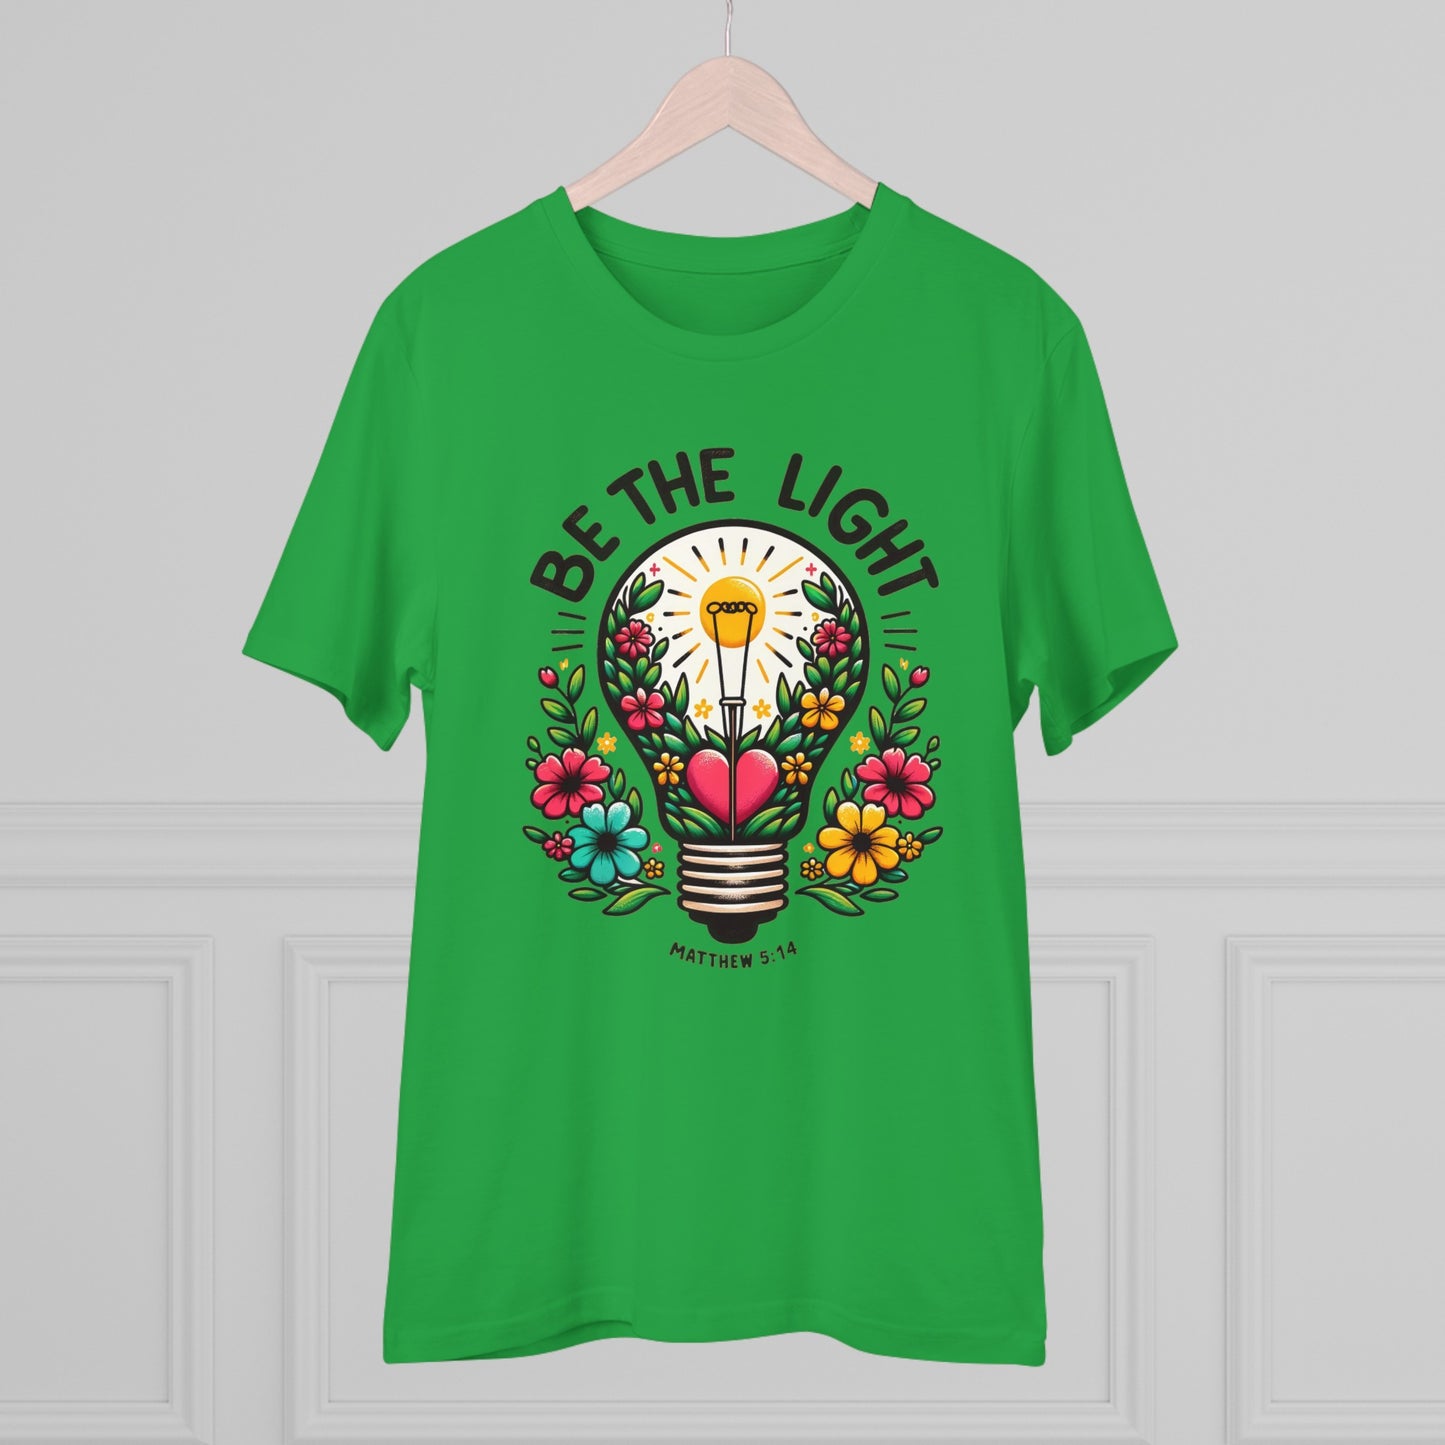 Be the light - Matthew 5:14 - Organic Unisex T-shirt